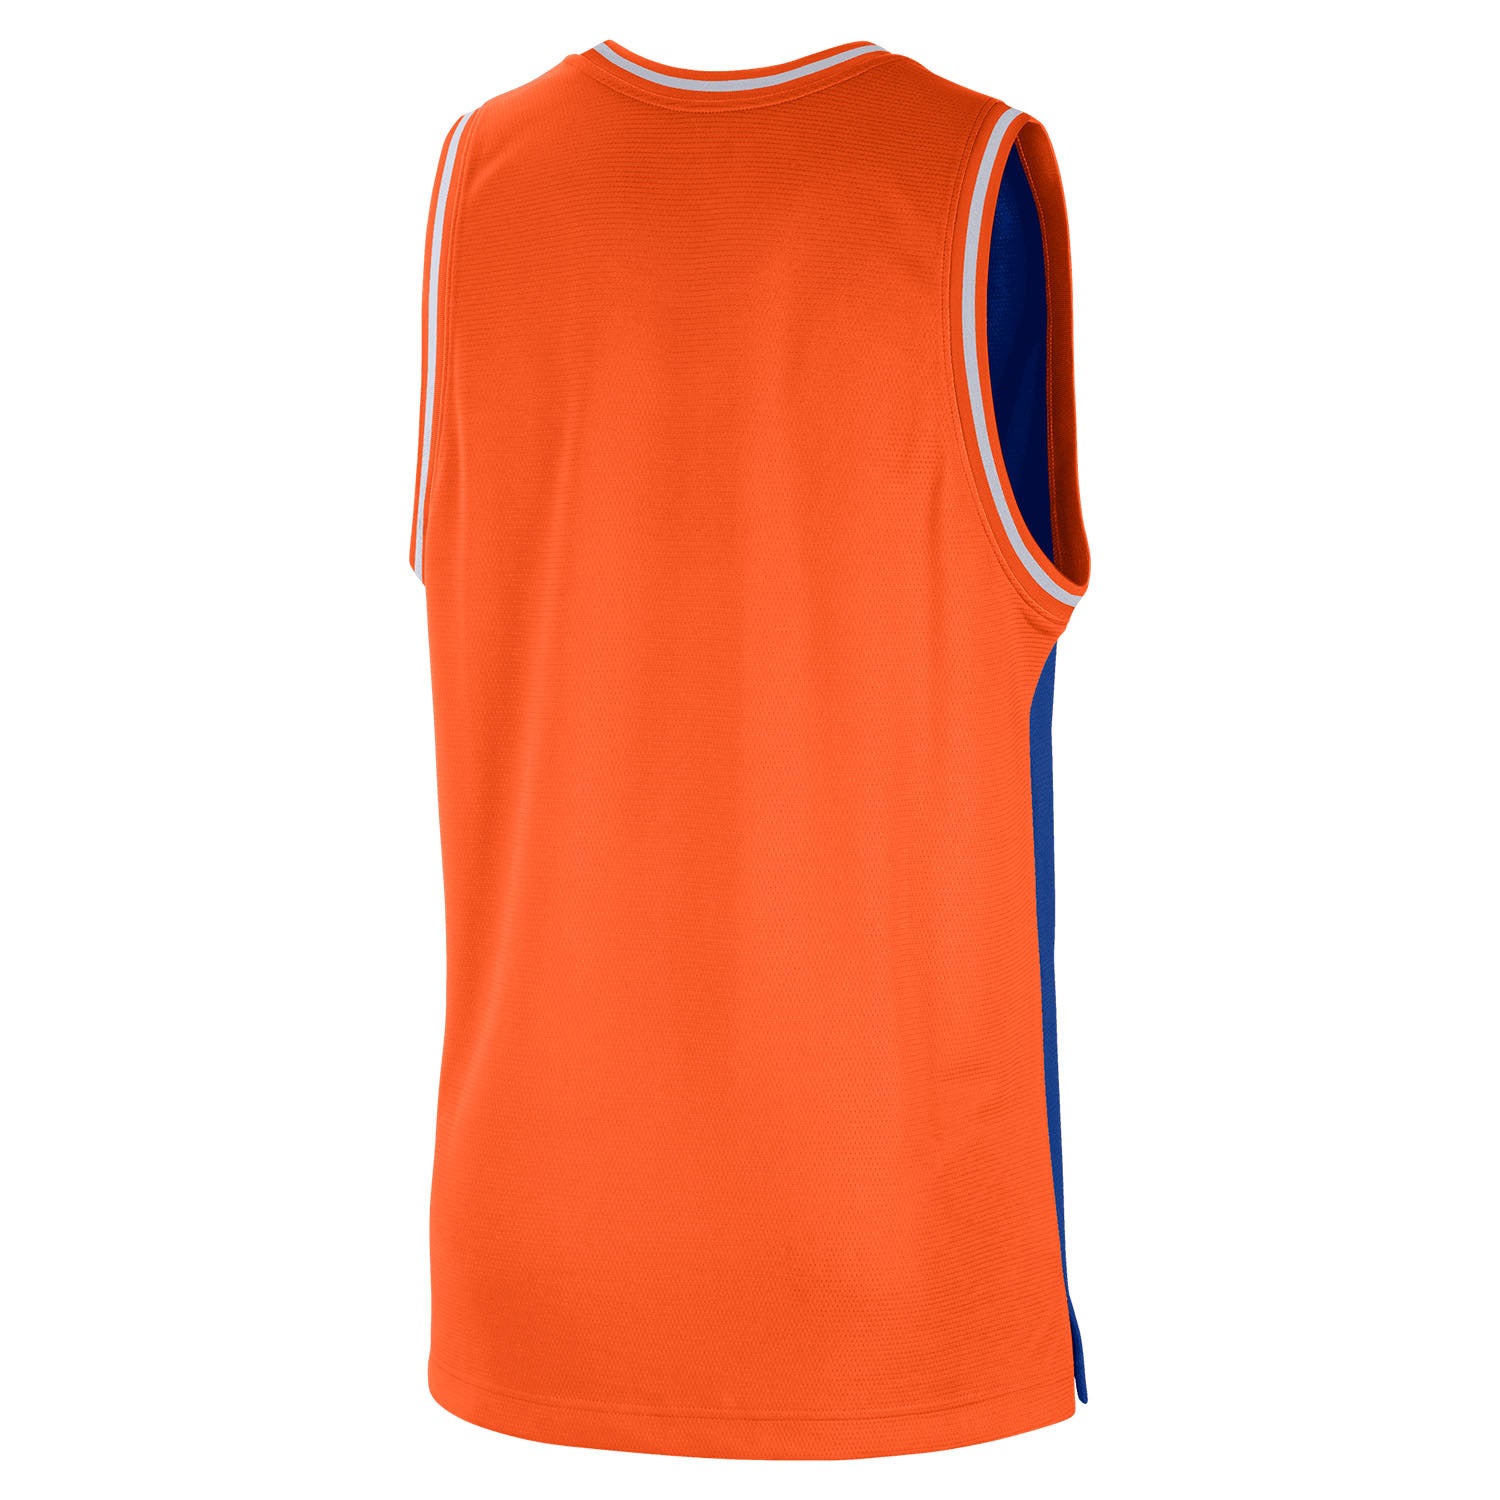 New York Knicks Courtside City Edition Women's Nike NBA T-Shirt